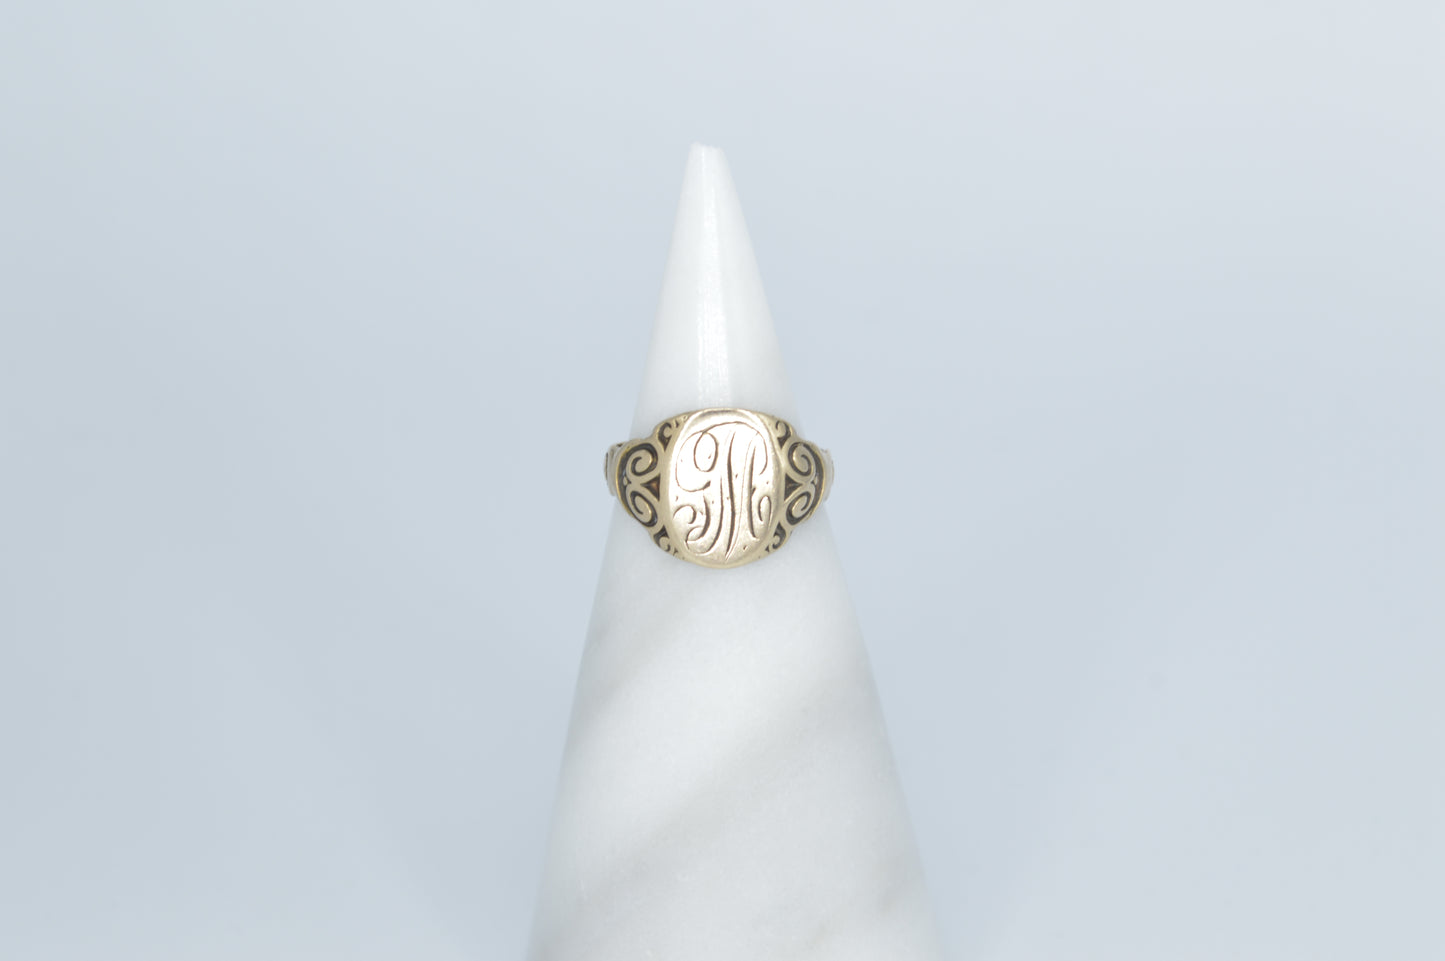 "G.M." Engraved Ring